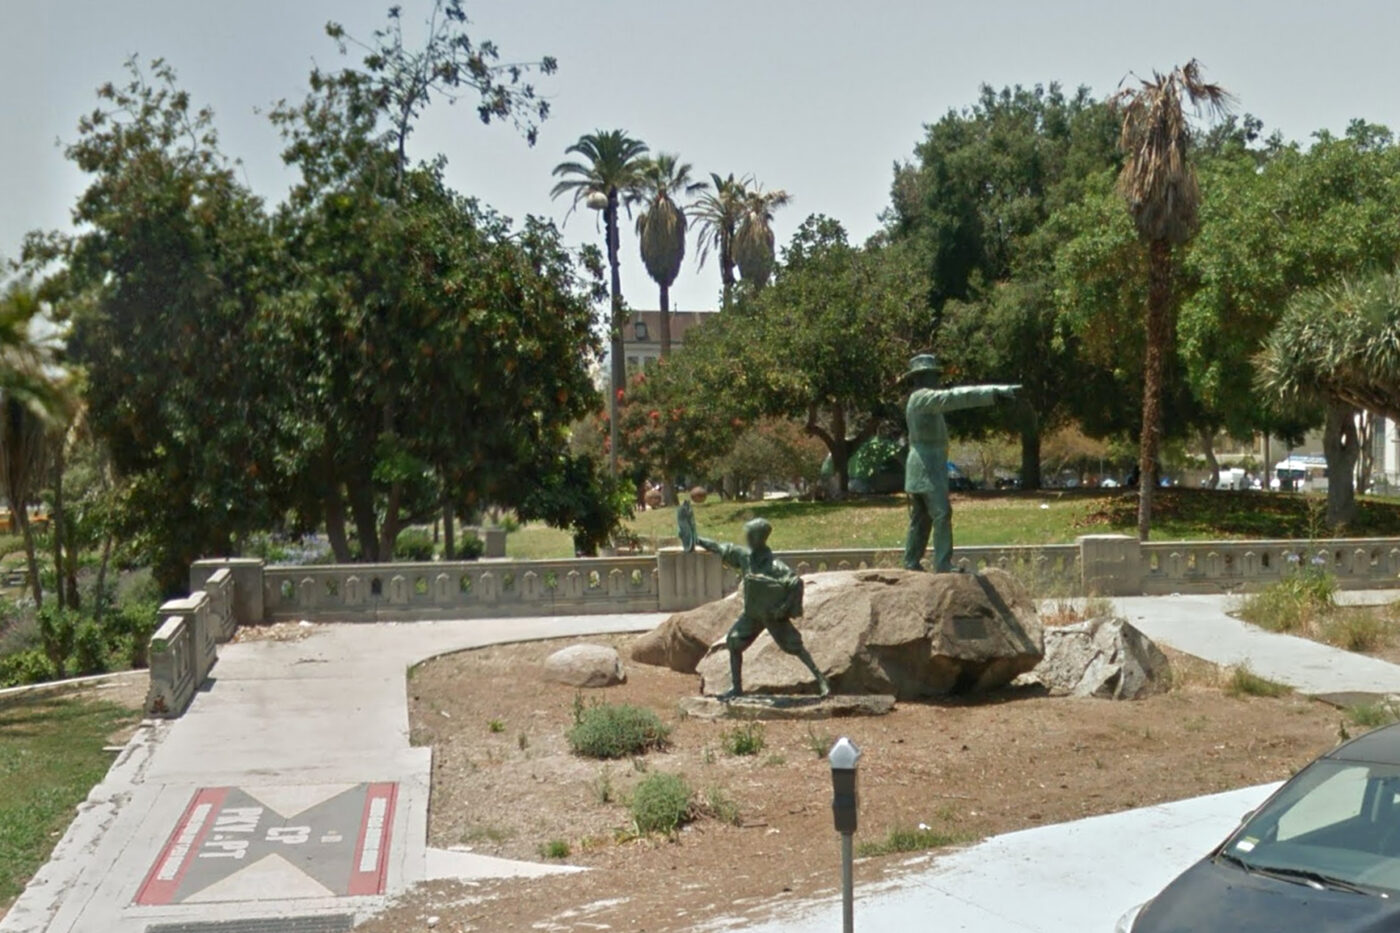 51. Newsboy, from The Otis Memorial. MacArthur Park, Los Angeles, California